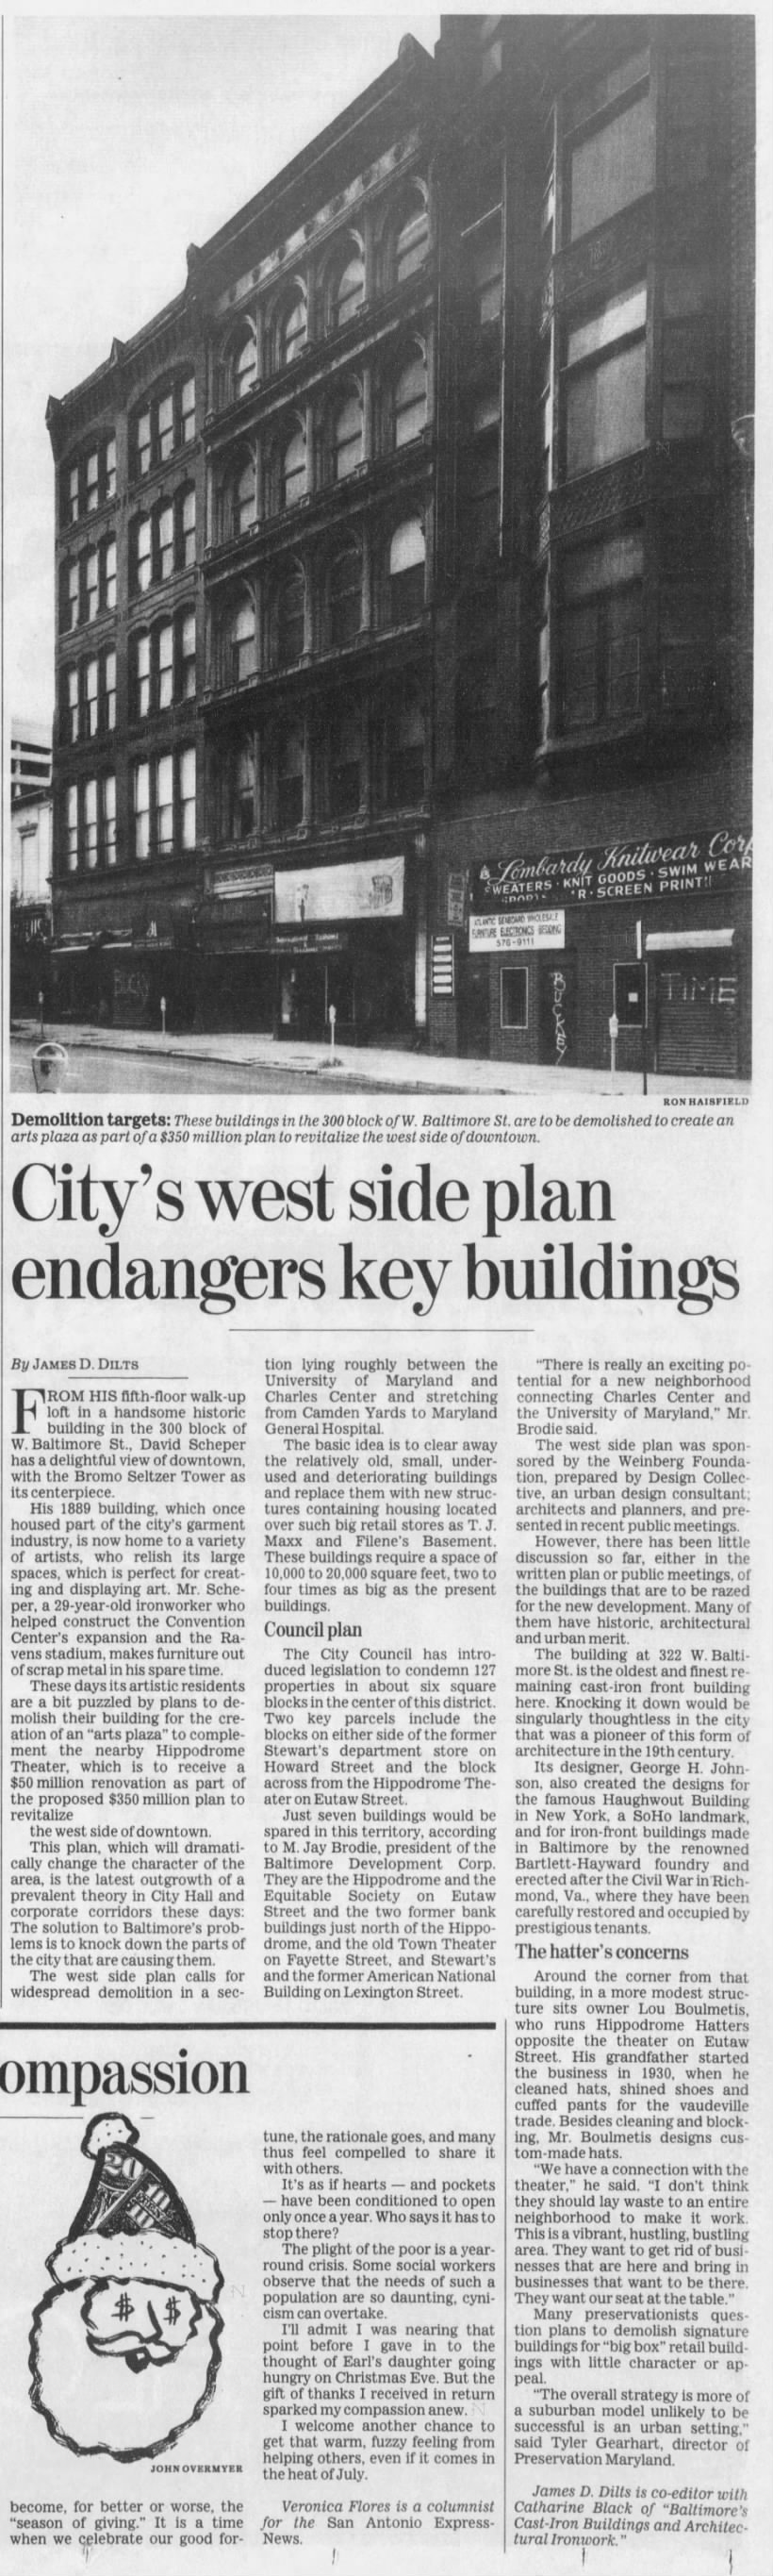 City's west side plan endangers key buildings